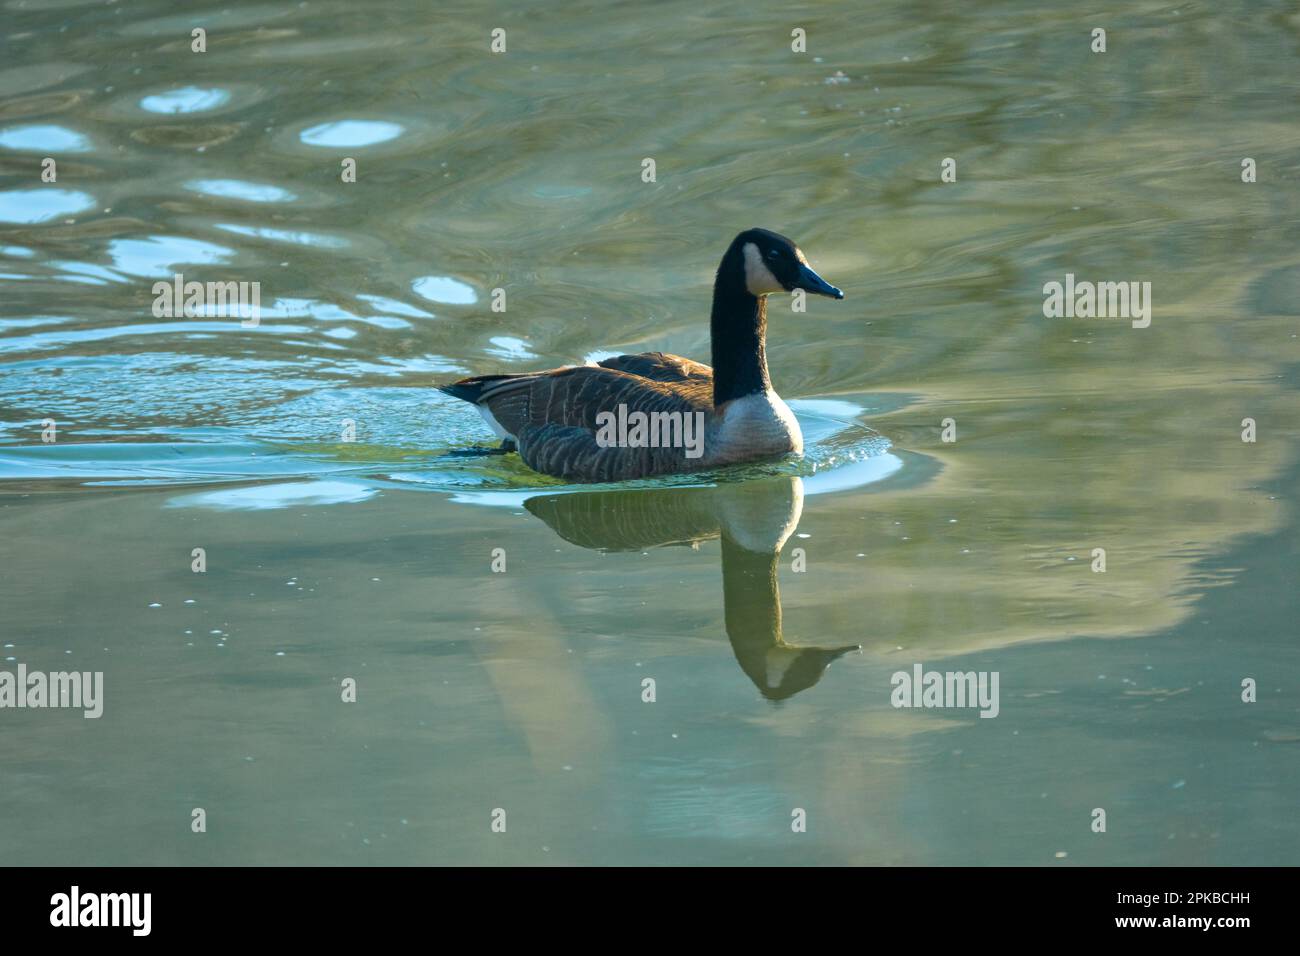 Europe, Germany, Hesse, Waldecker Land, Kellerwald-Edersee National Park, Canada Goose (Branta canadensis) swimming on the water Stock Photo